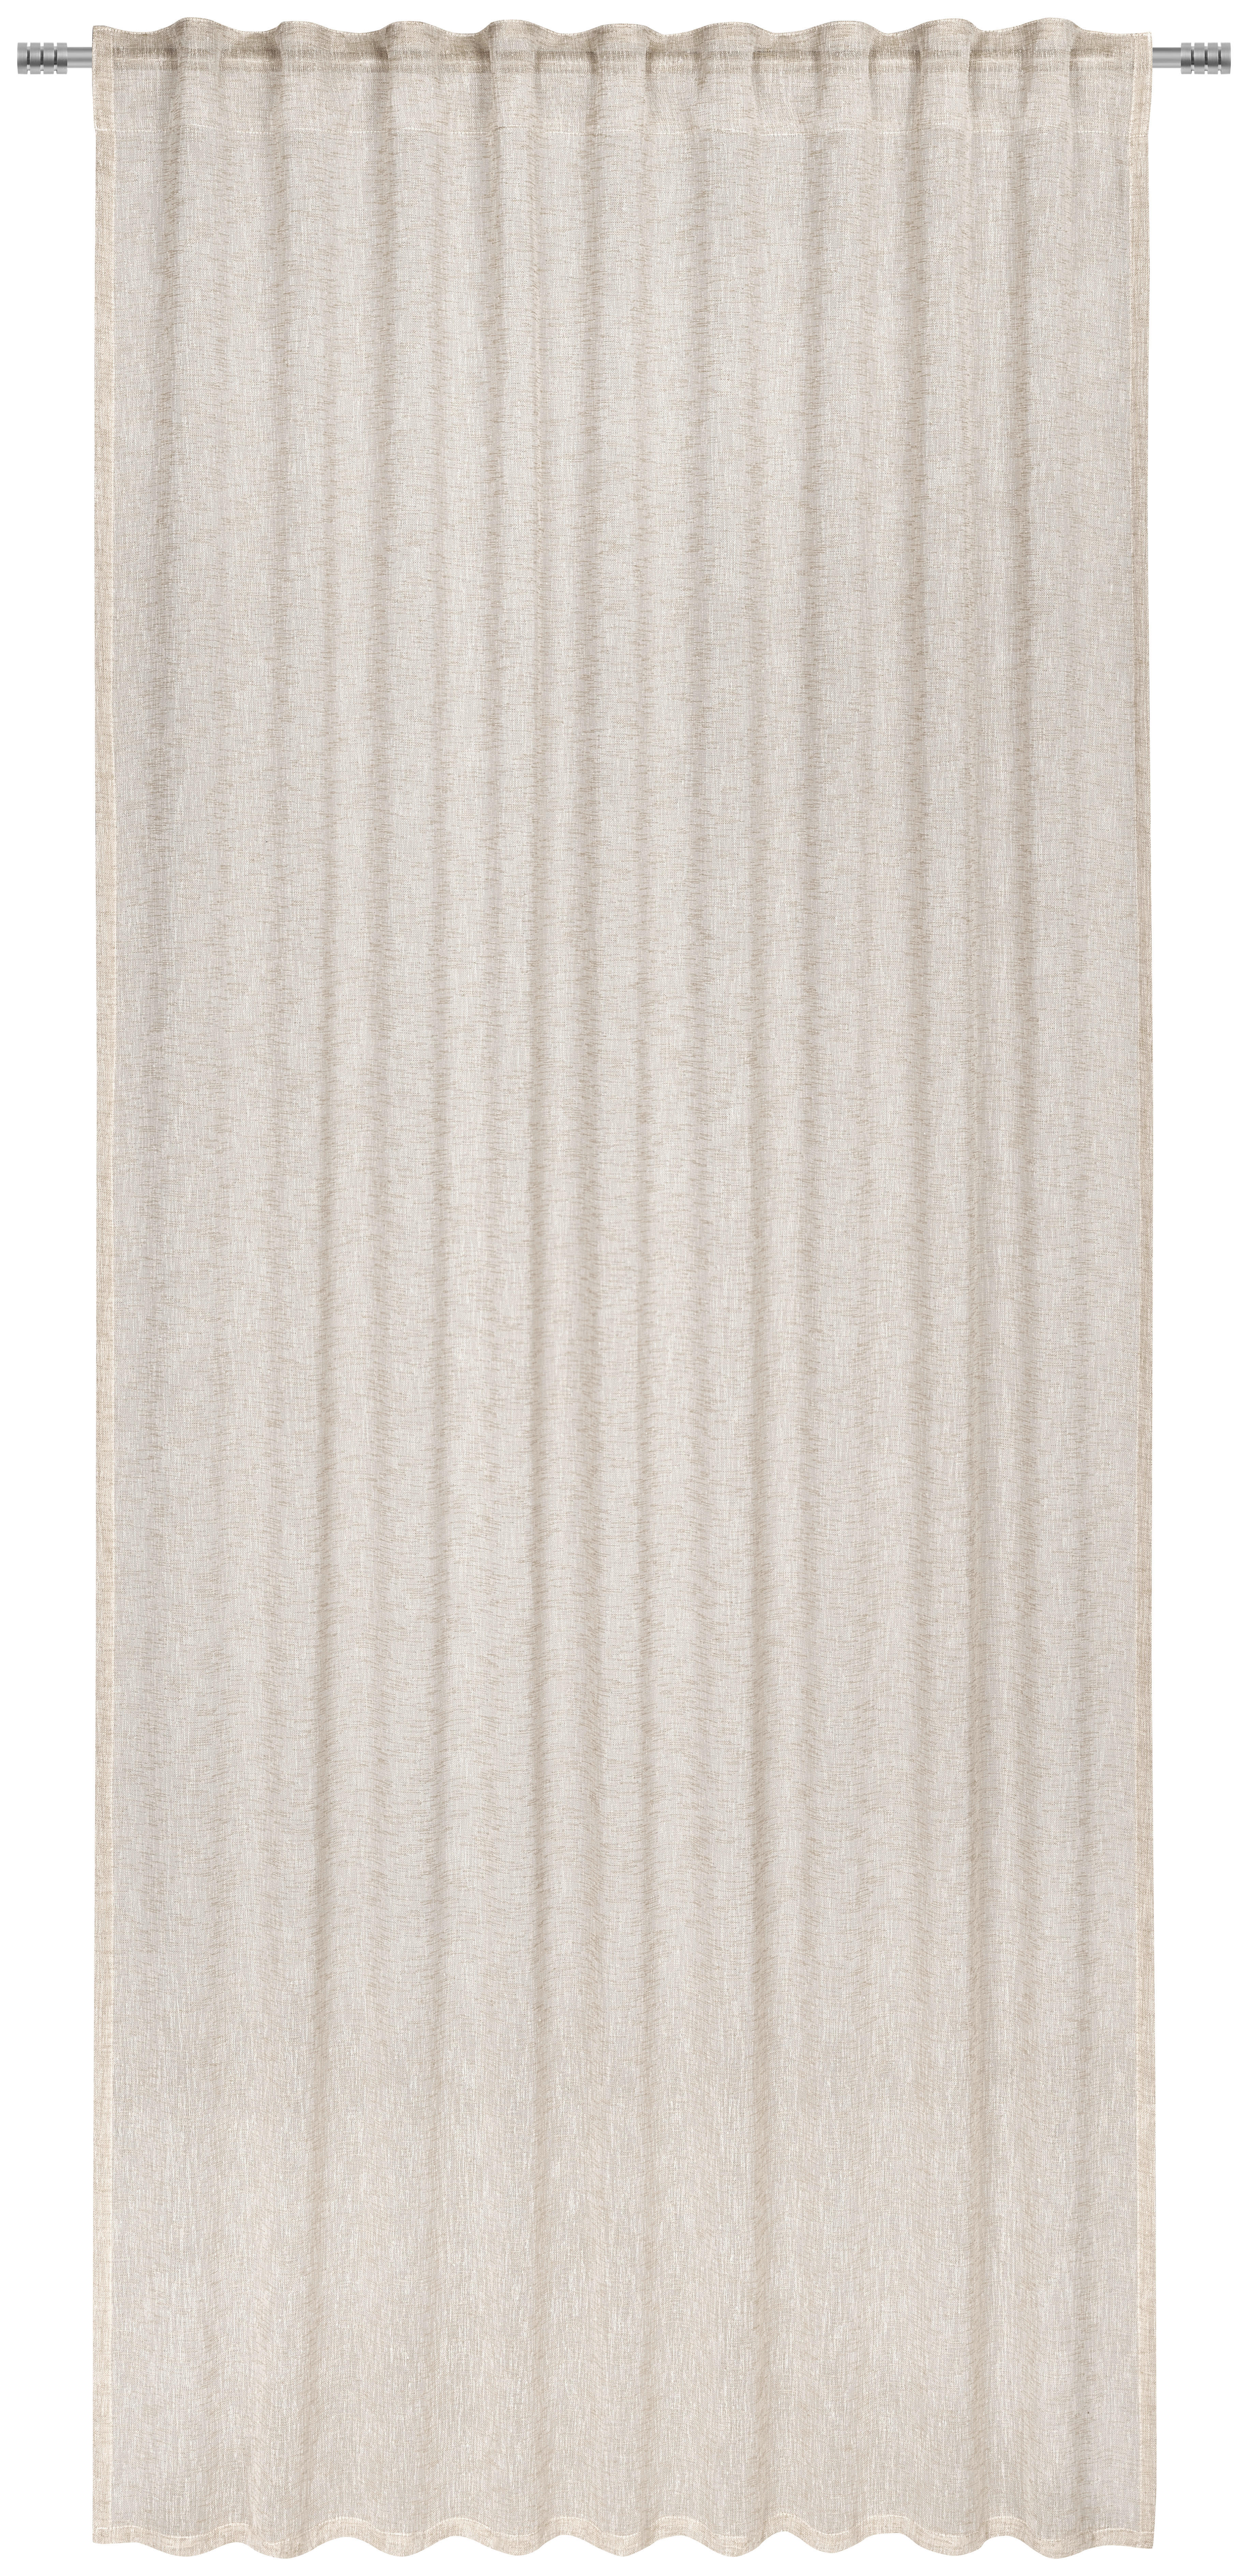 FERTIGVORHANG LANA halbtransparent 140/245 cm   - Sandfarben, Basics, Textil (140/245cm) - Esposa